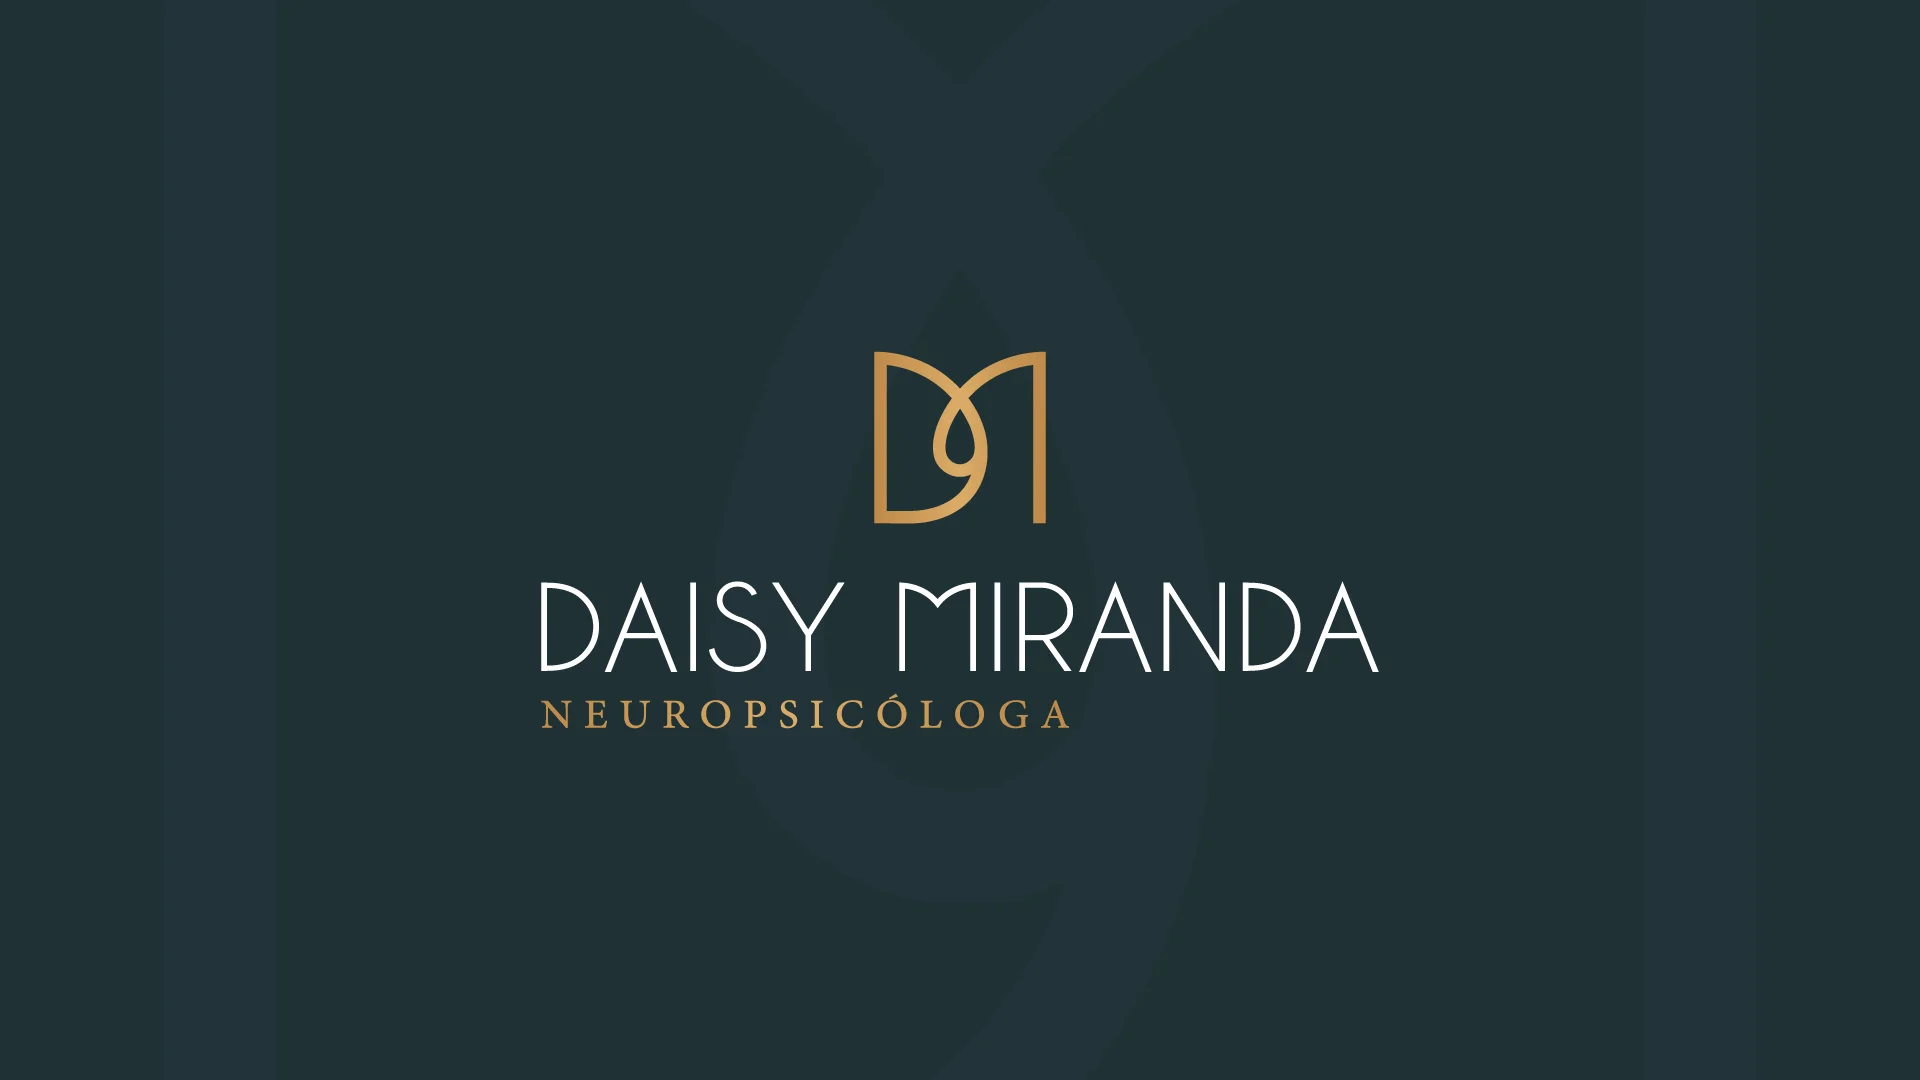 Identidade Visual da Dra. Daisy Miranda, desenvolvido por Andreza Araújo, especialista em Design de Marcas.